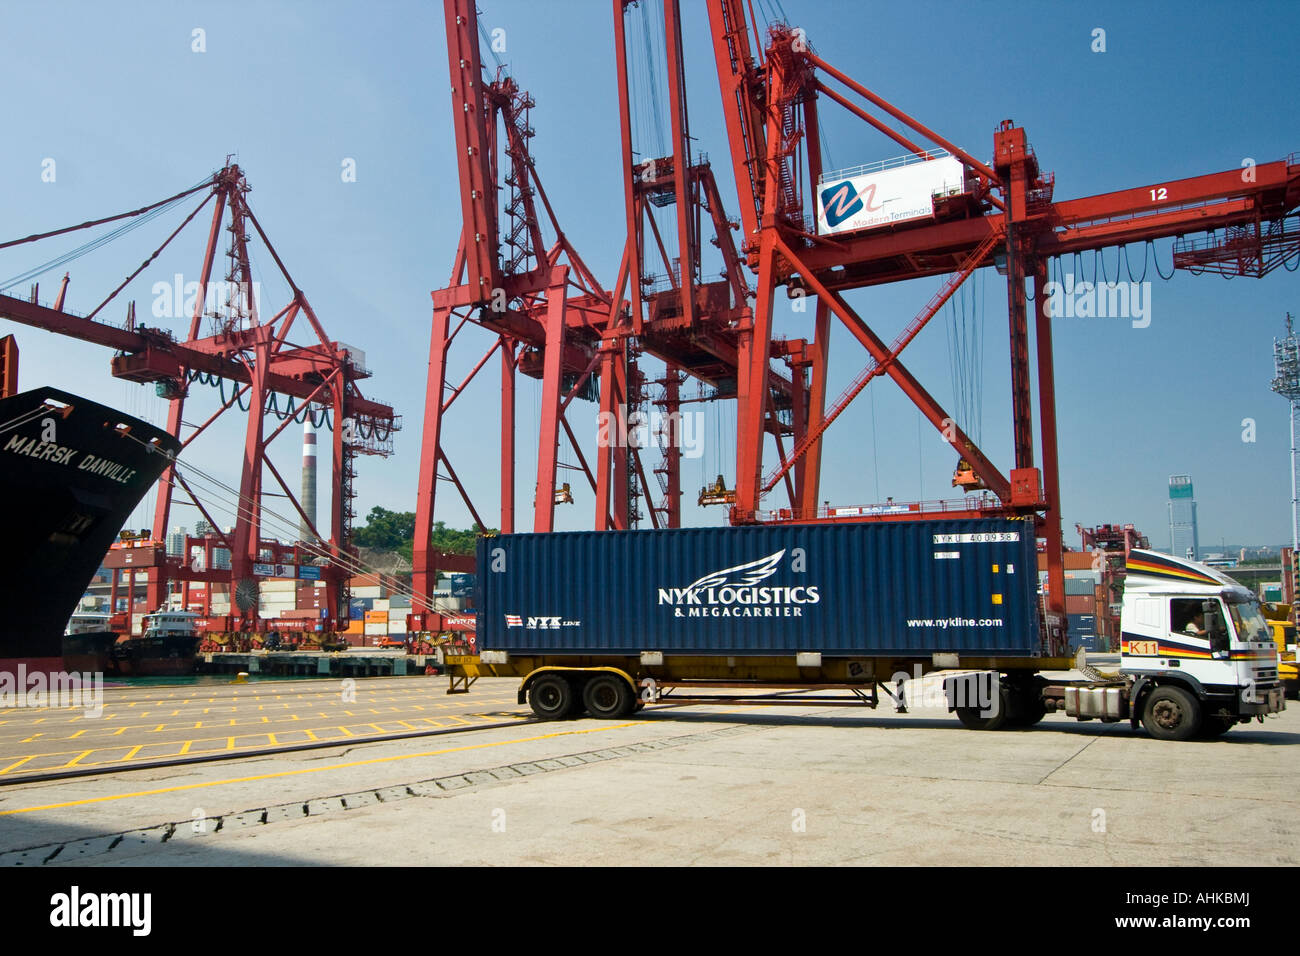 Kran-beladen LKW fahren mit NYK Logistics Frachtcontainer, Hong Kong Hafen Docks Stockfoto